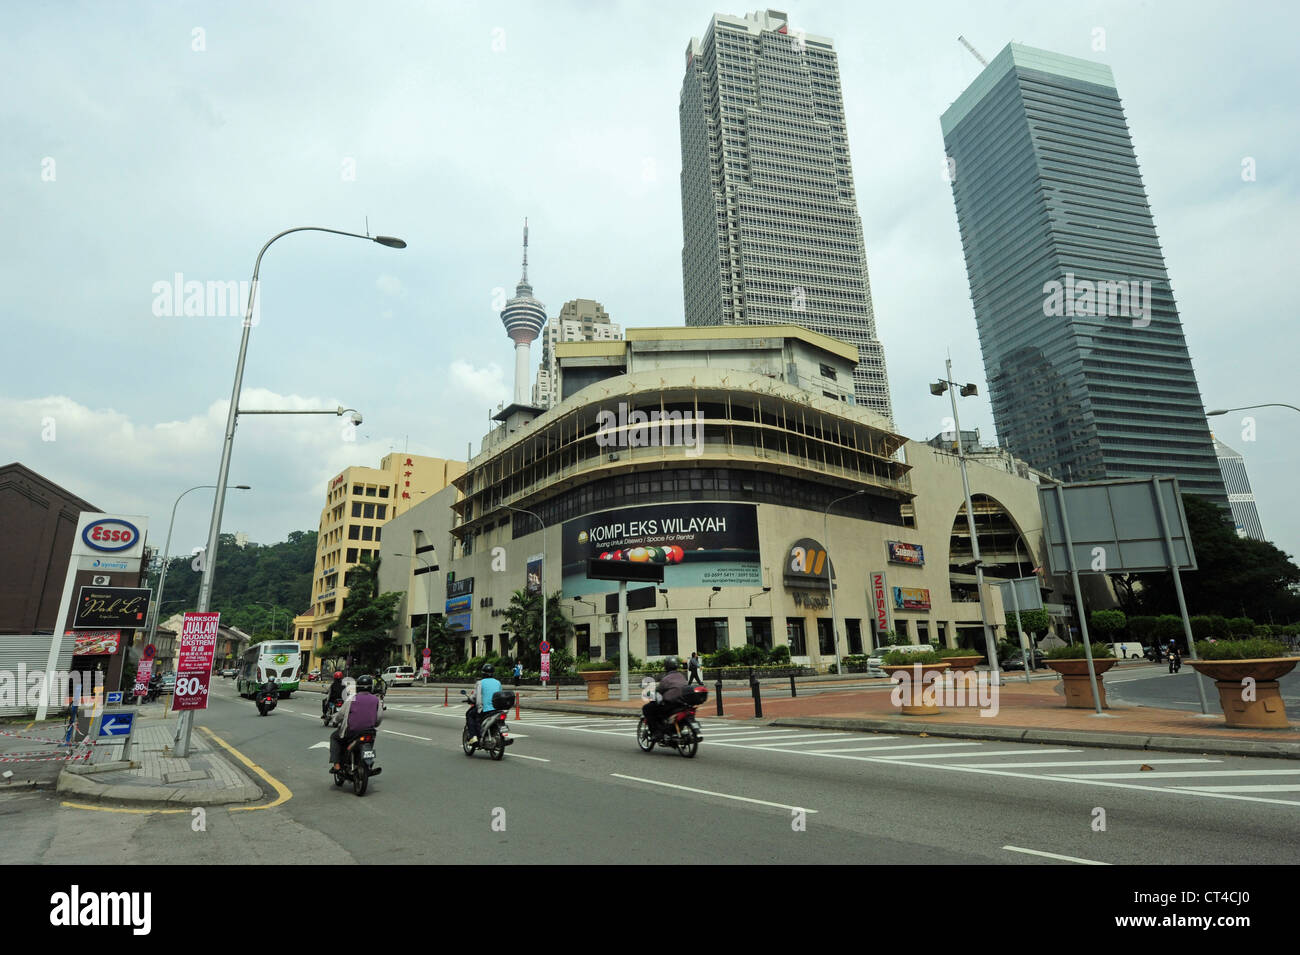 Malaysia, Kuala Lumpur, street view of KL Tower Stock Photo